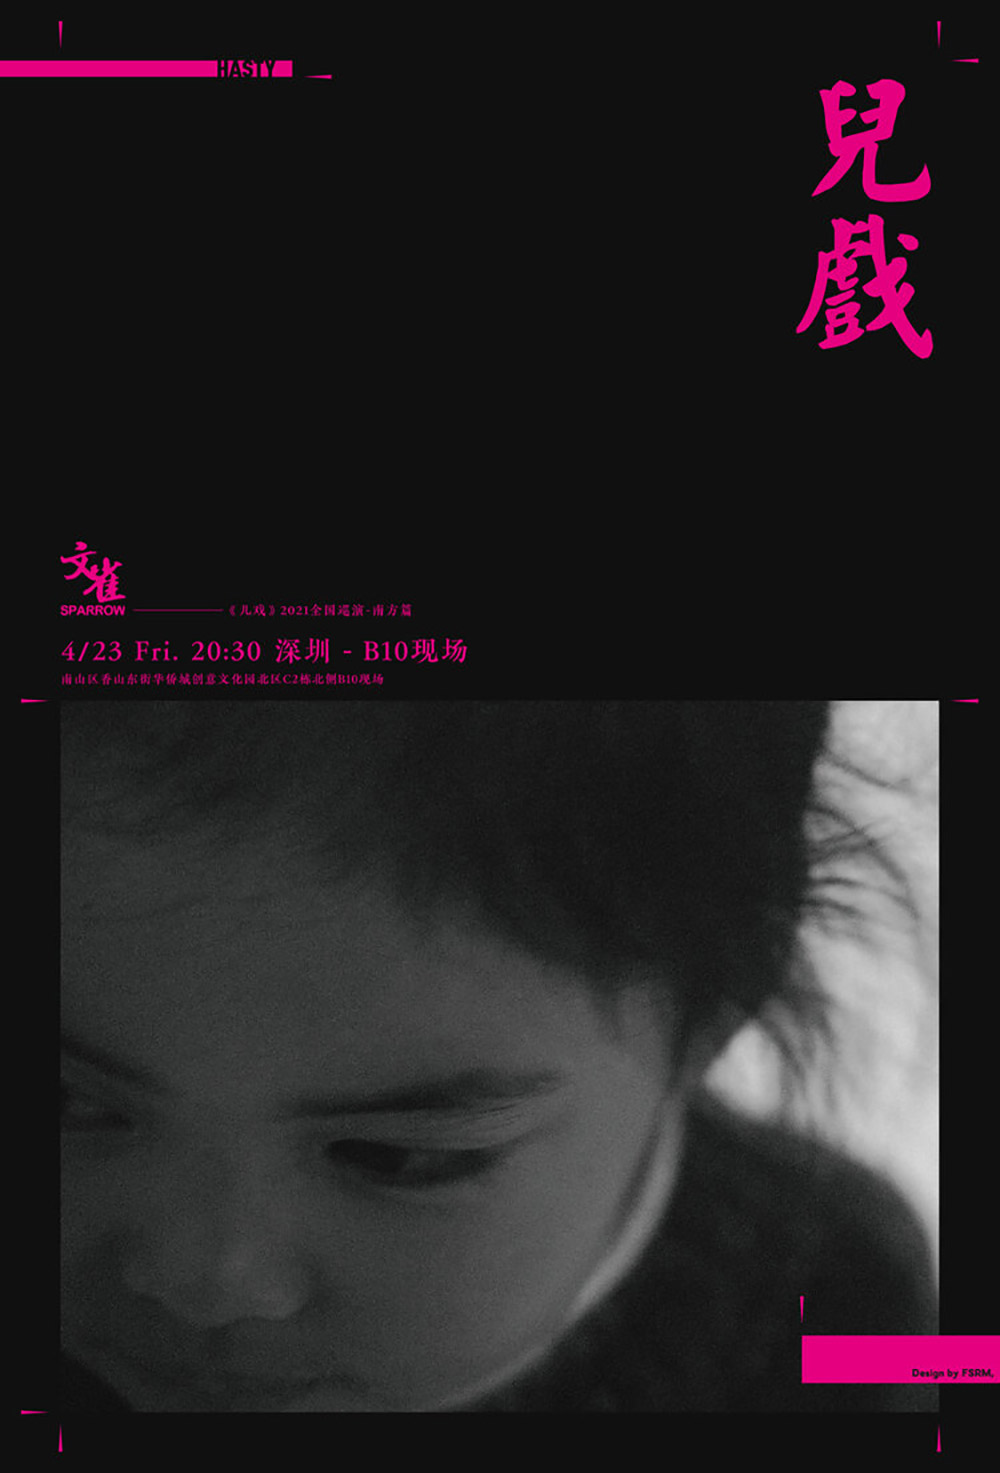 12张深圳B10Live音乐活动海报